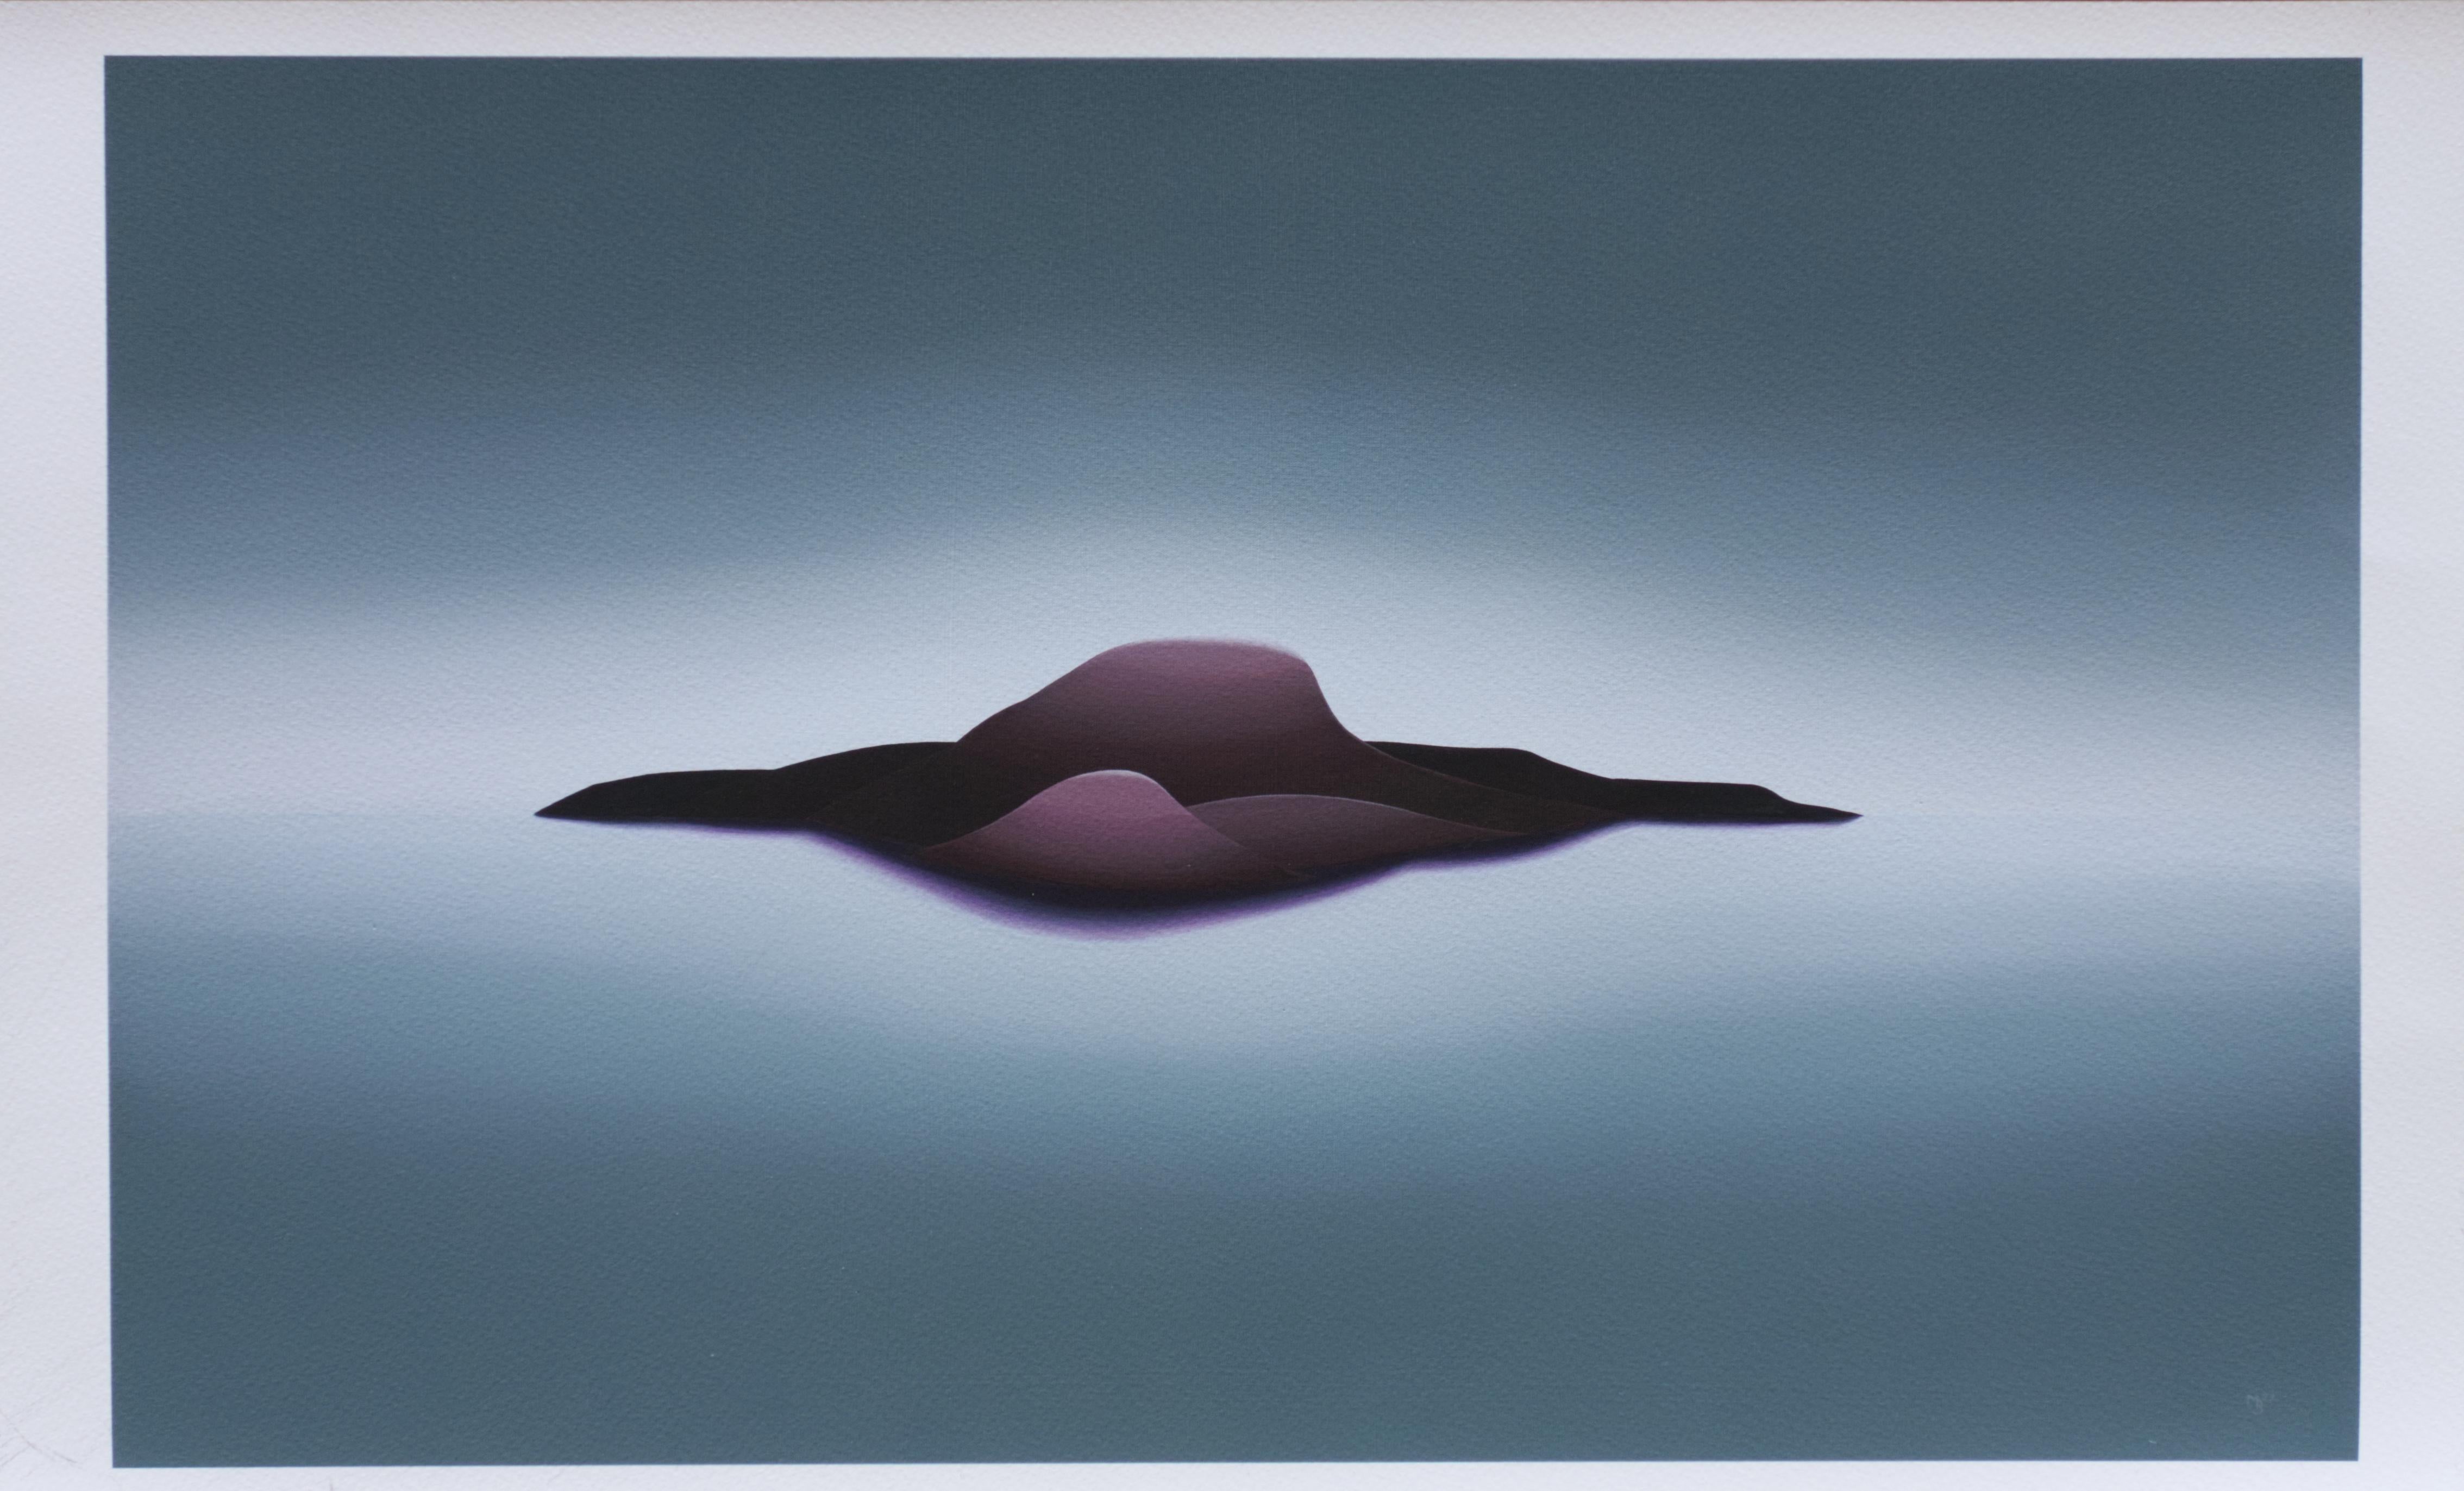 Abstract Print Matt Beasant - Islande Vesica -  7.5x12" Impression d'archives, édition limitée